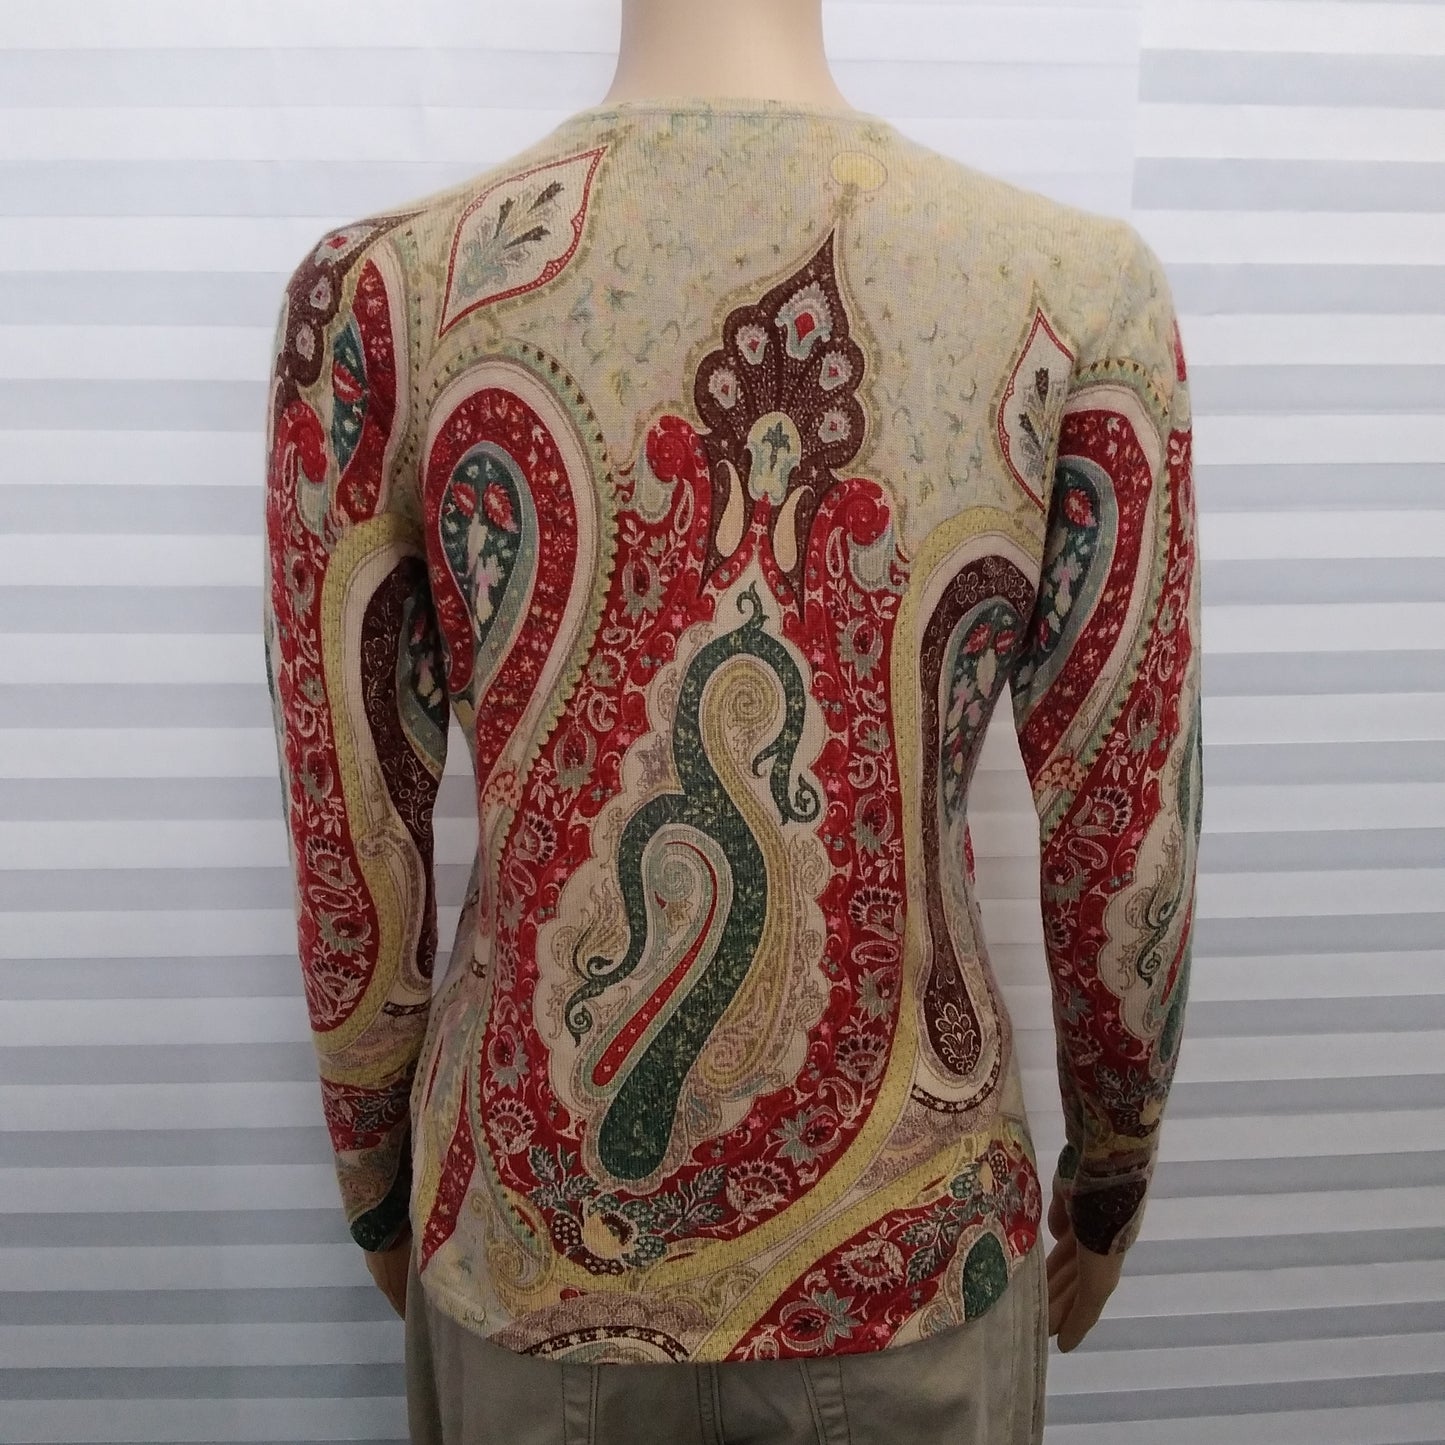 Bergdorf Goodman Multicolor Cashmere Sweater - Size M